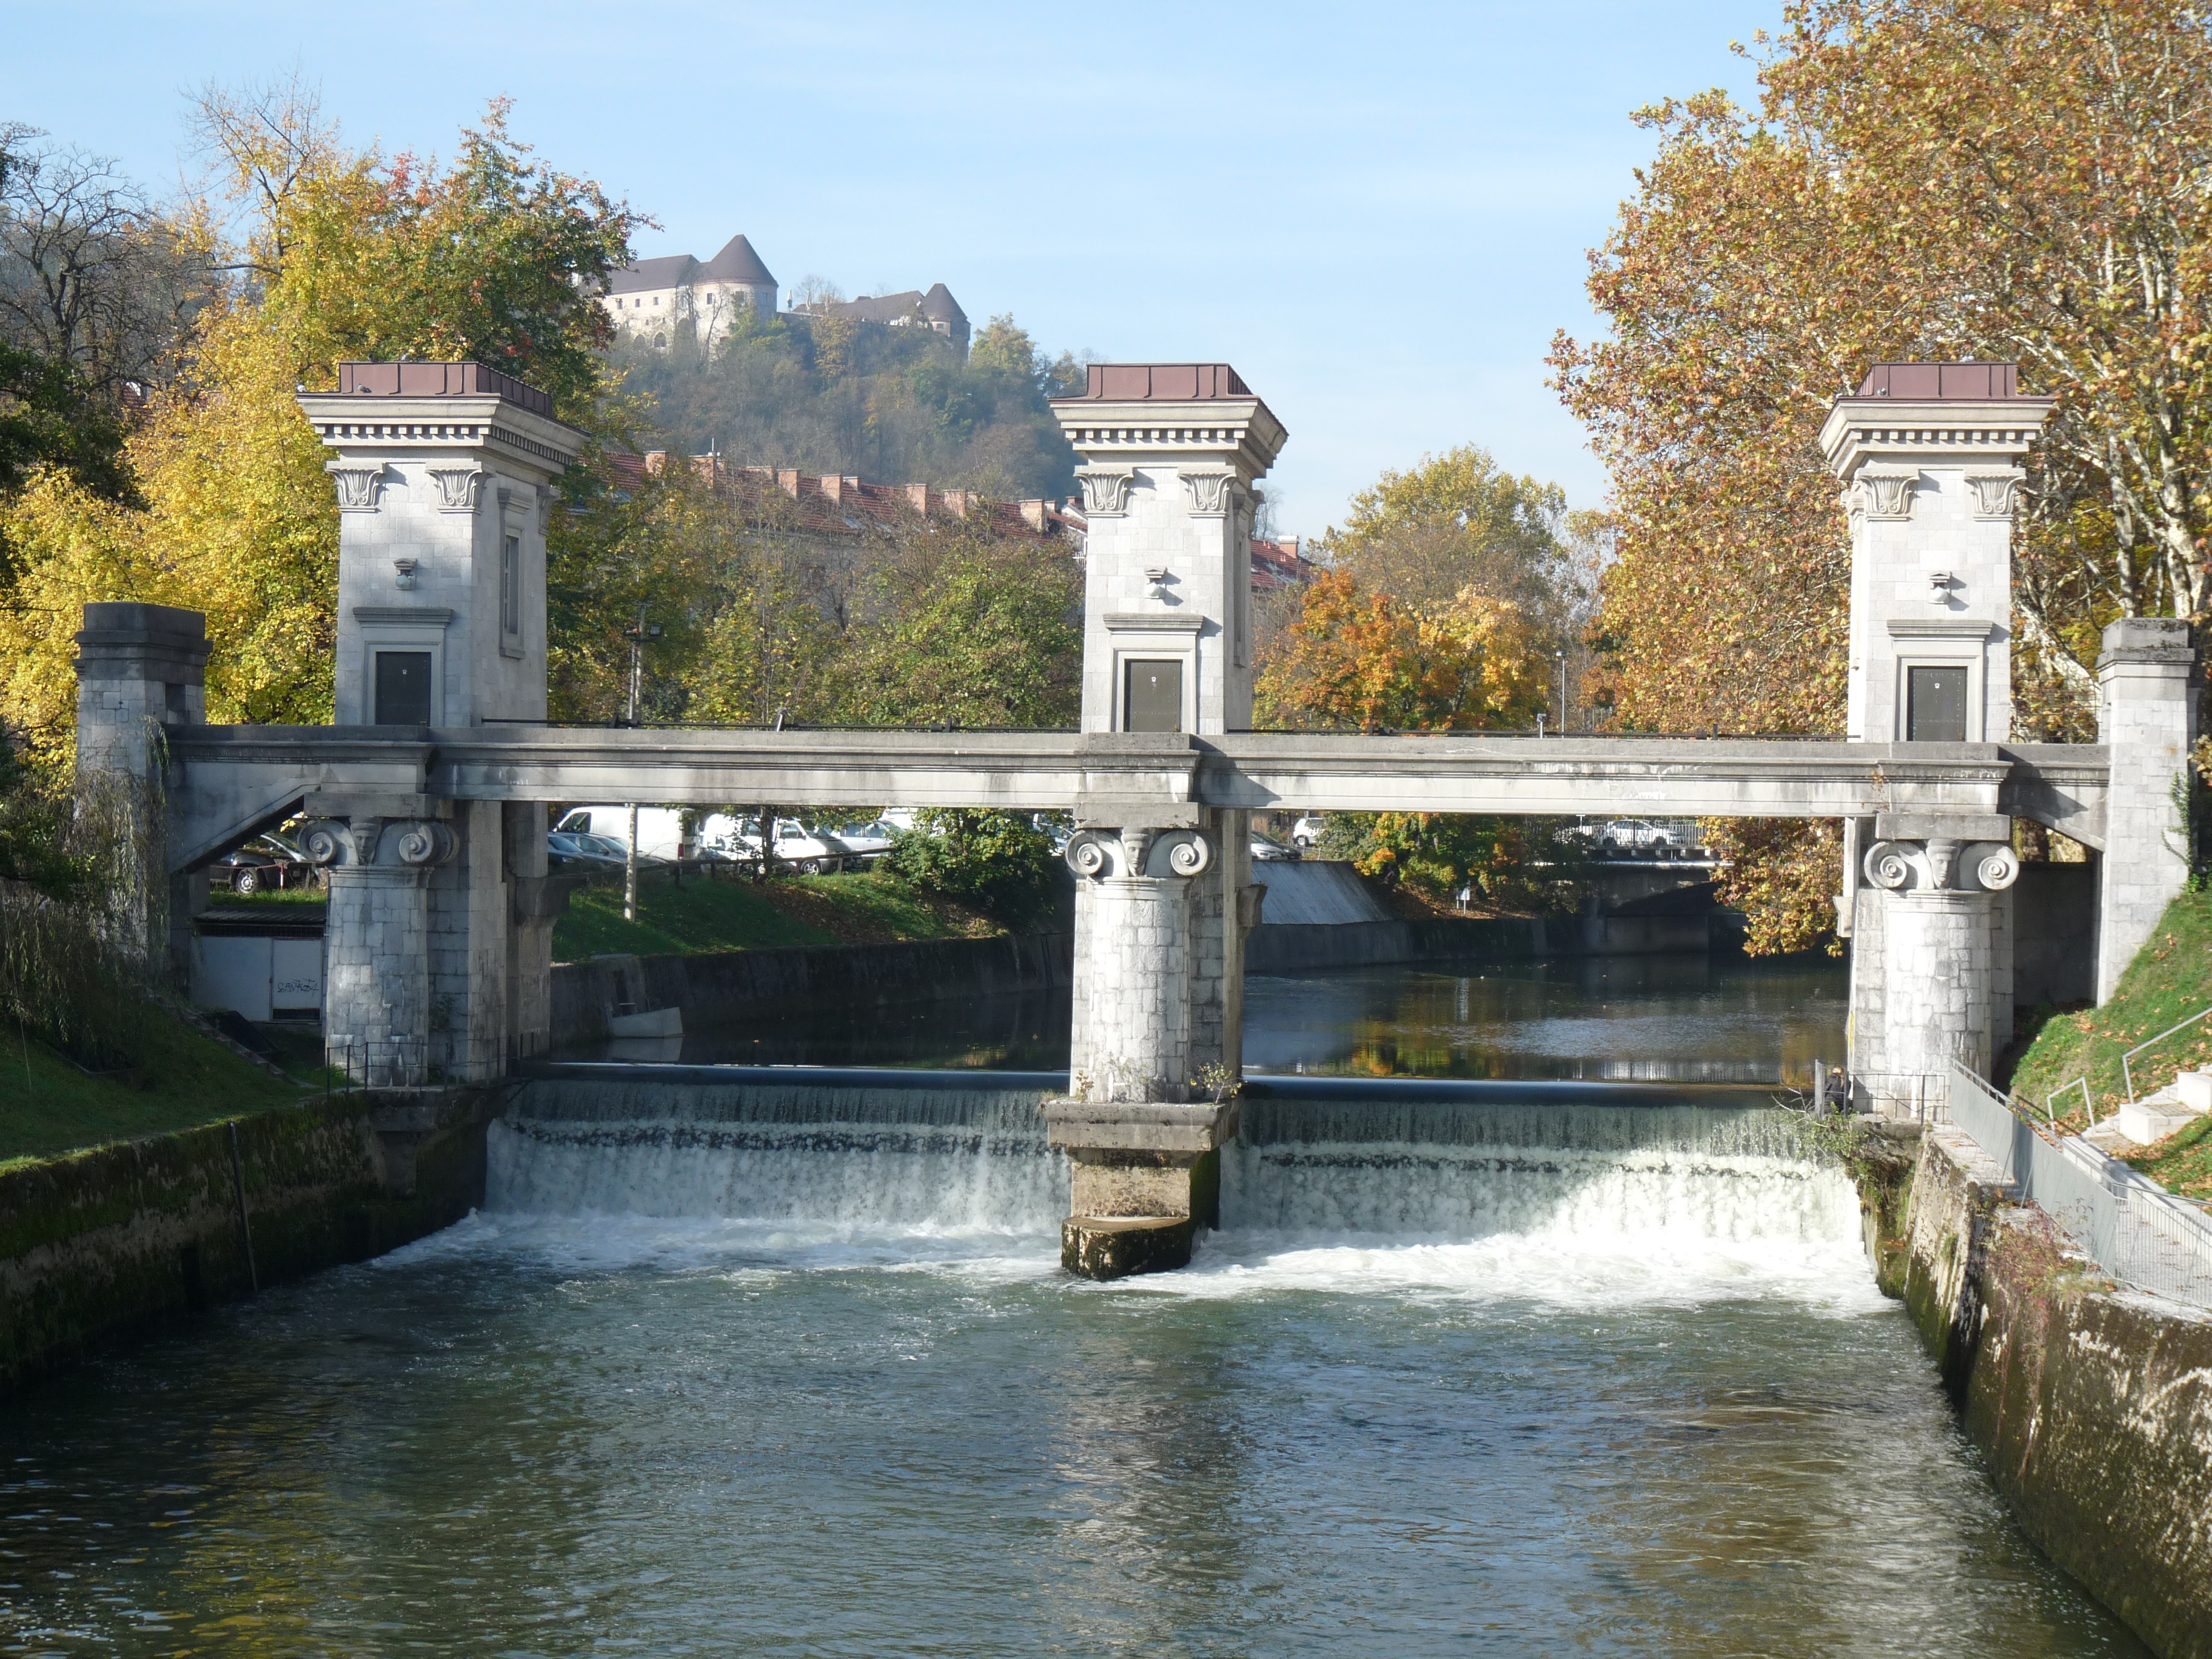 Sluice gates on the River Ljubljanica, designed by Joze Plecnik